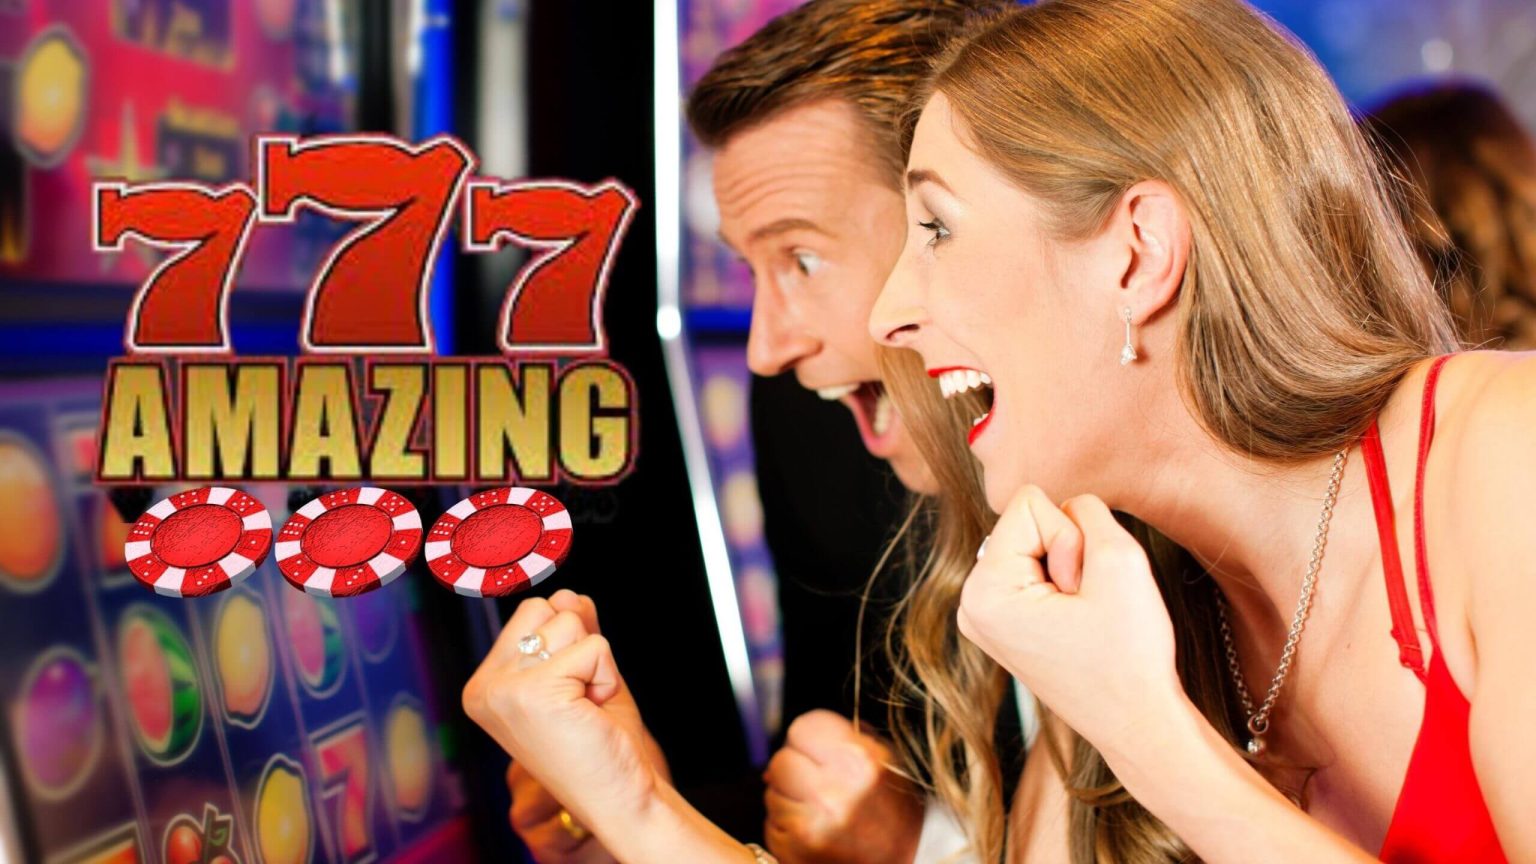 Amazing 777 Com Login at www.amazing777.com - Royal Eagle Casino Login